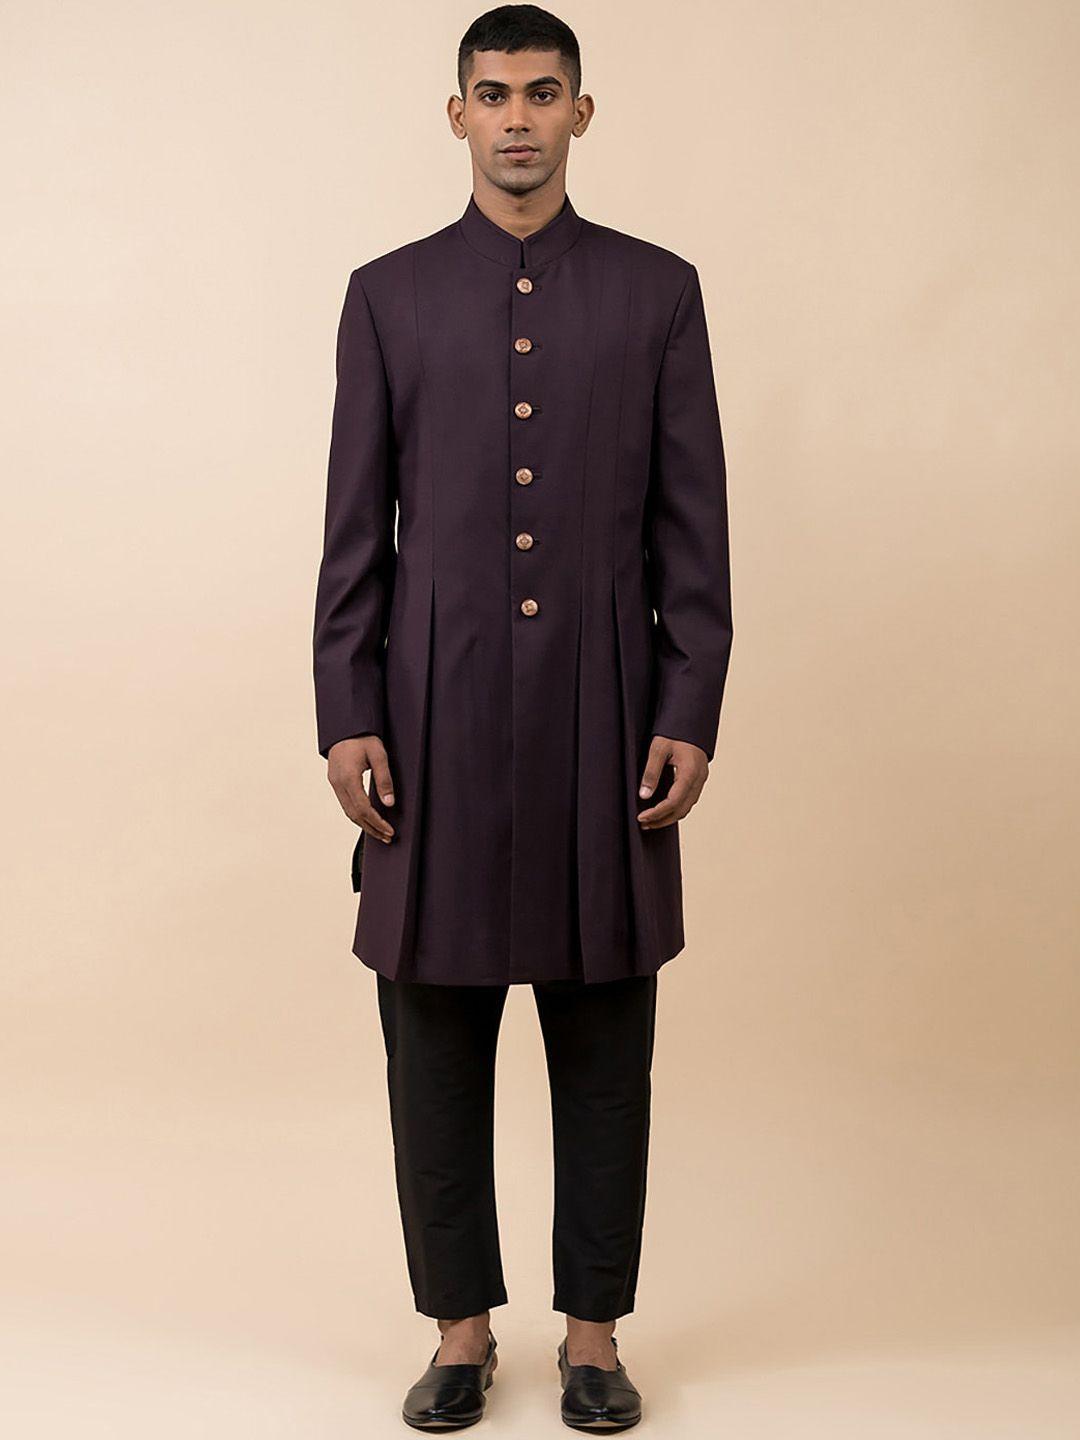 tasva men purple solid long sleeves sherwani